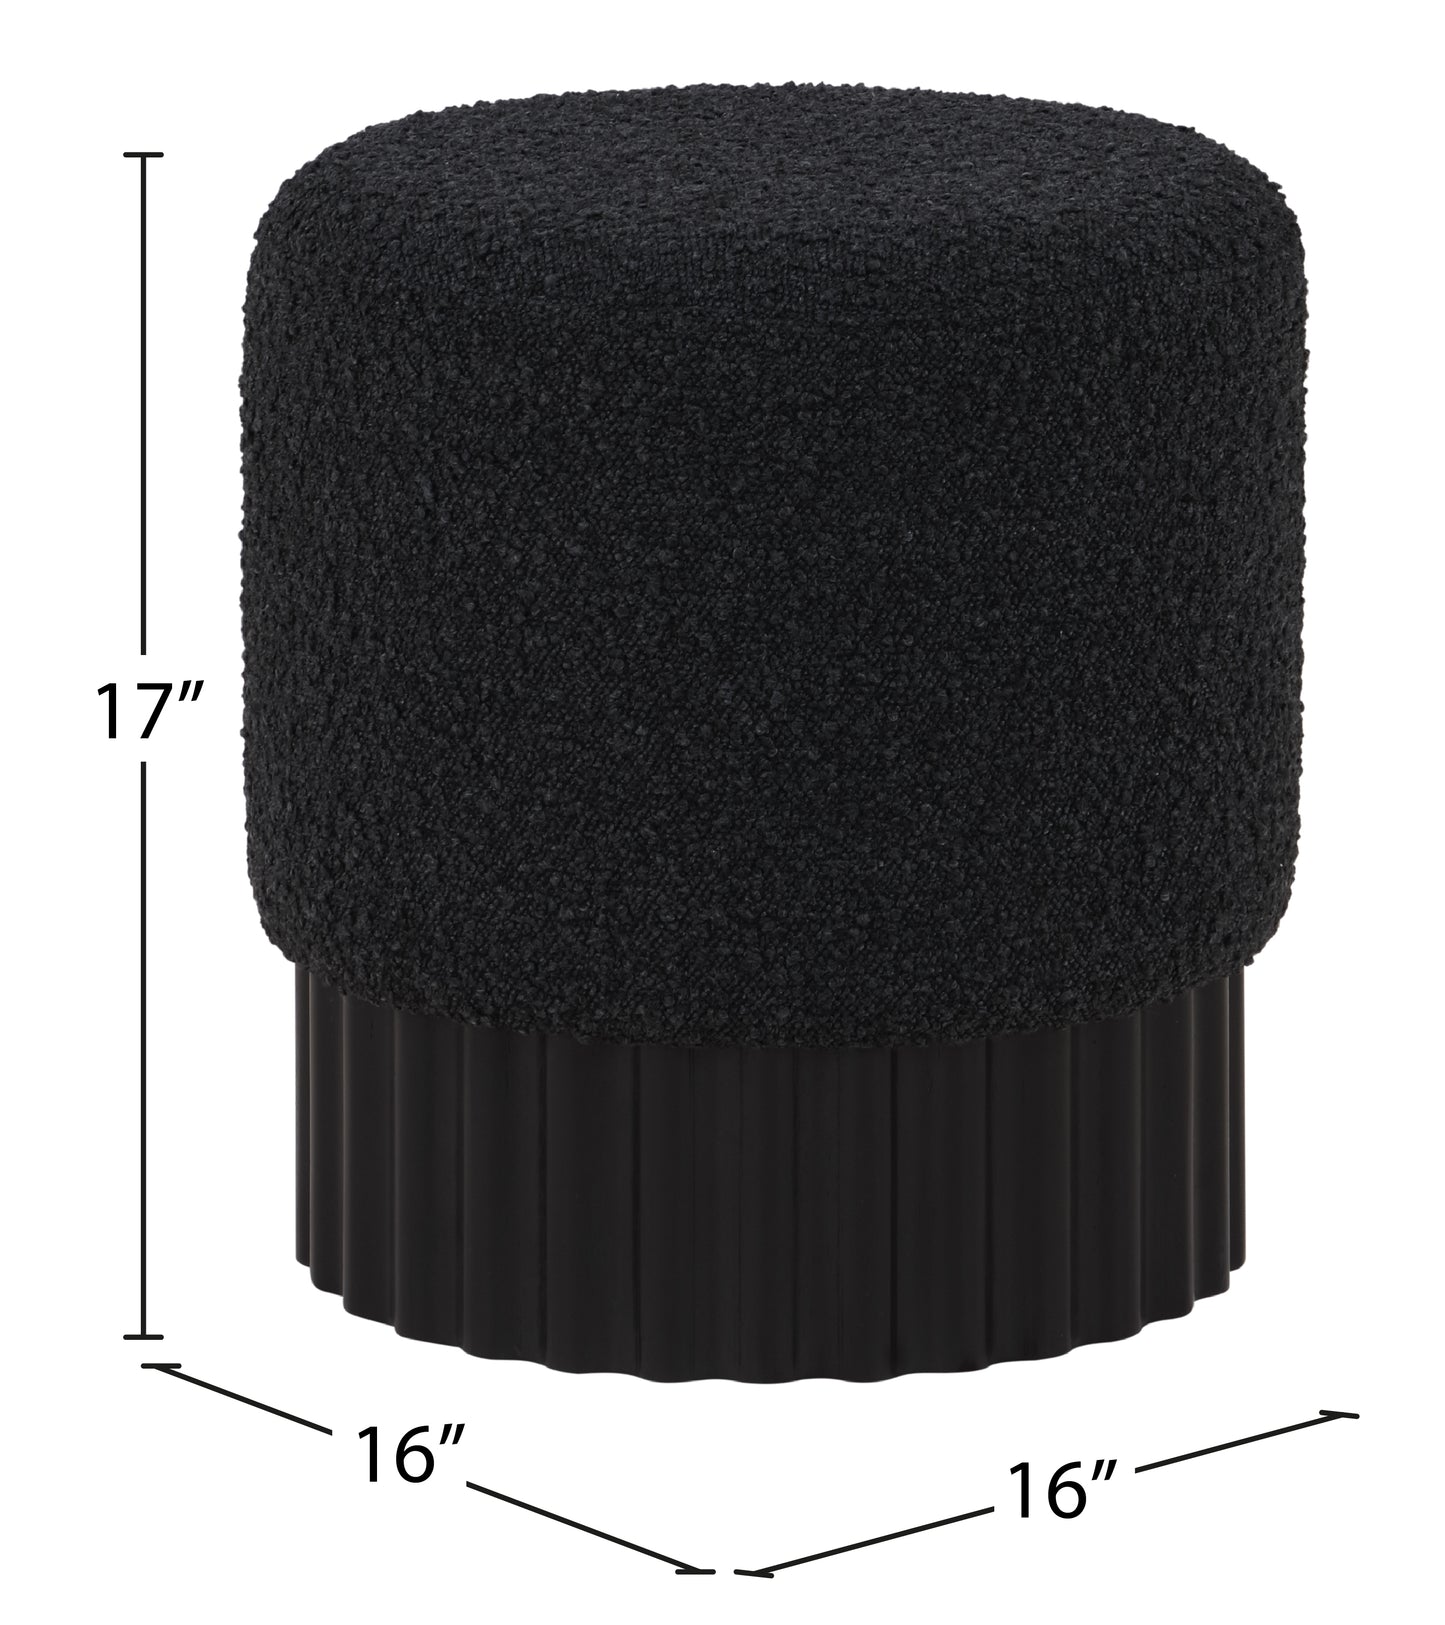 zaire black boucle fabric ottoman/stool black